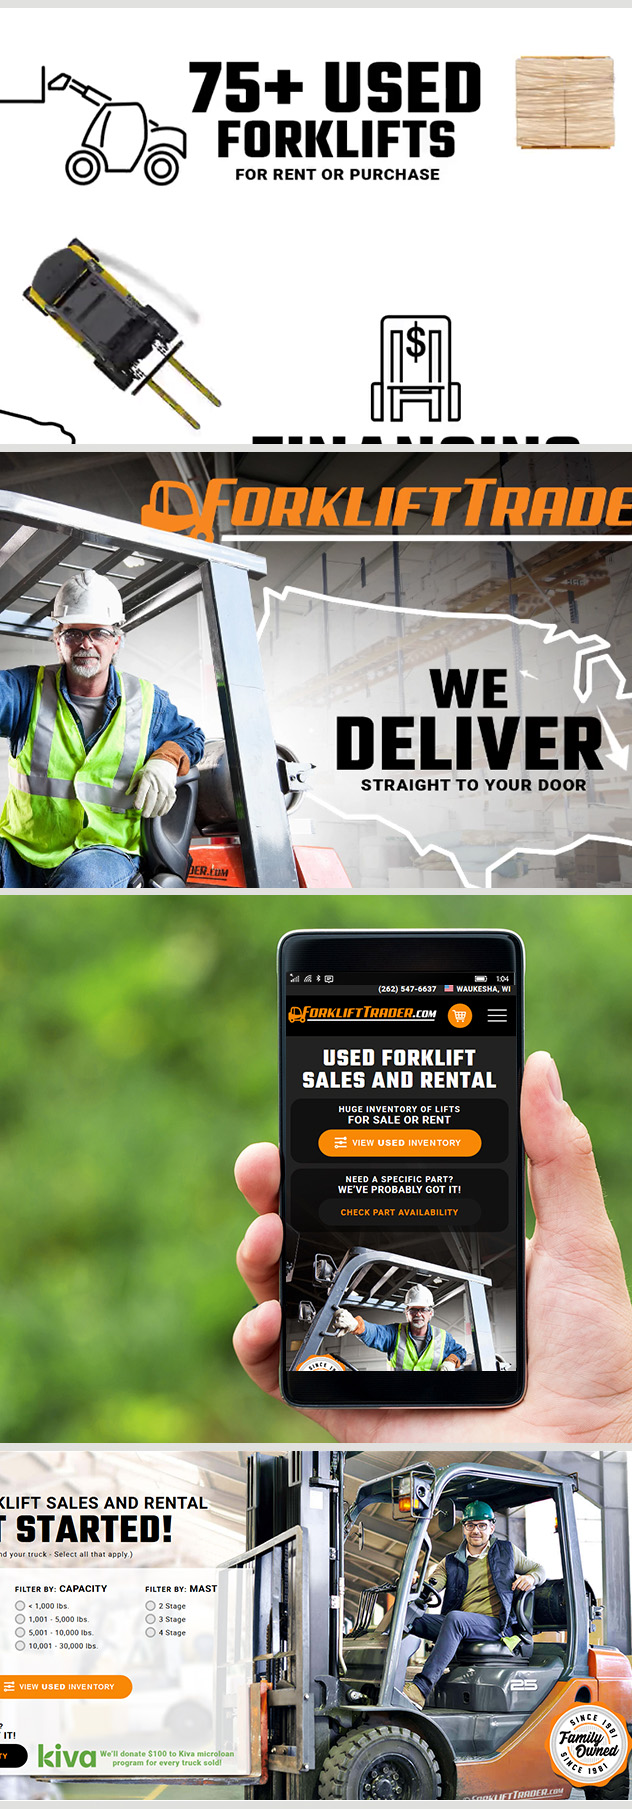 Milwaukee web design and development for Forklift Trader